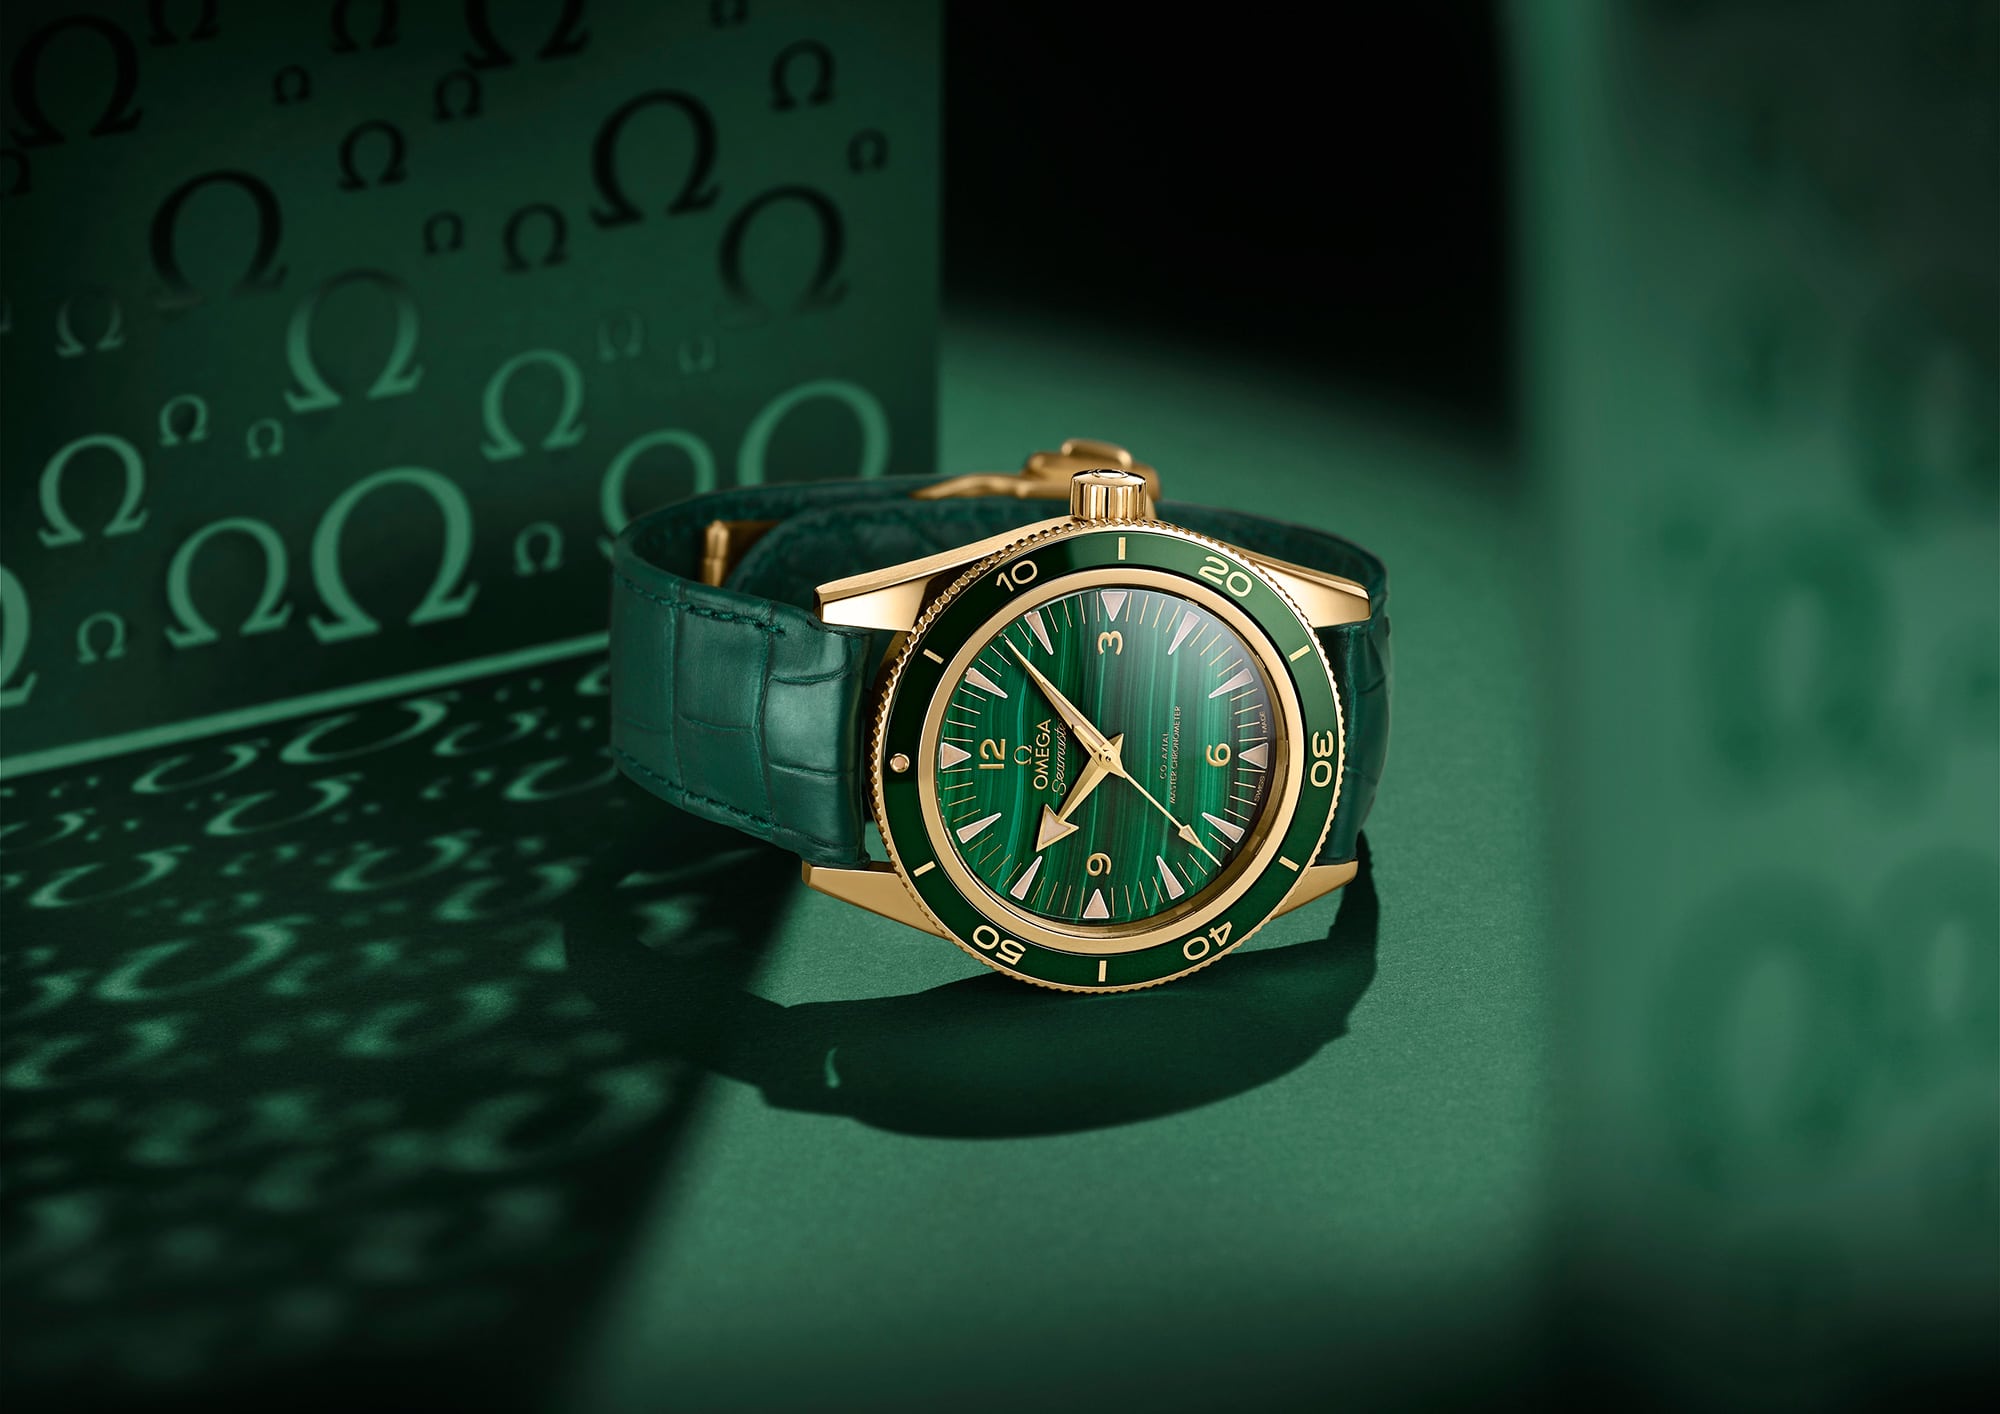 omega green watch